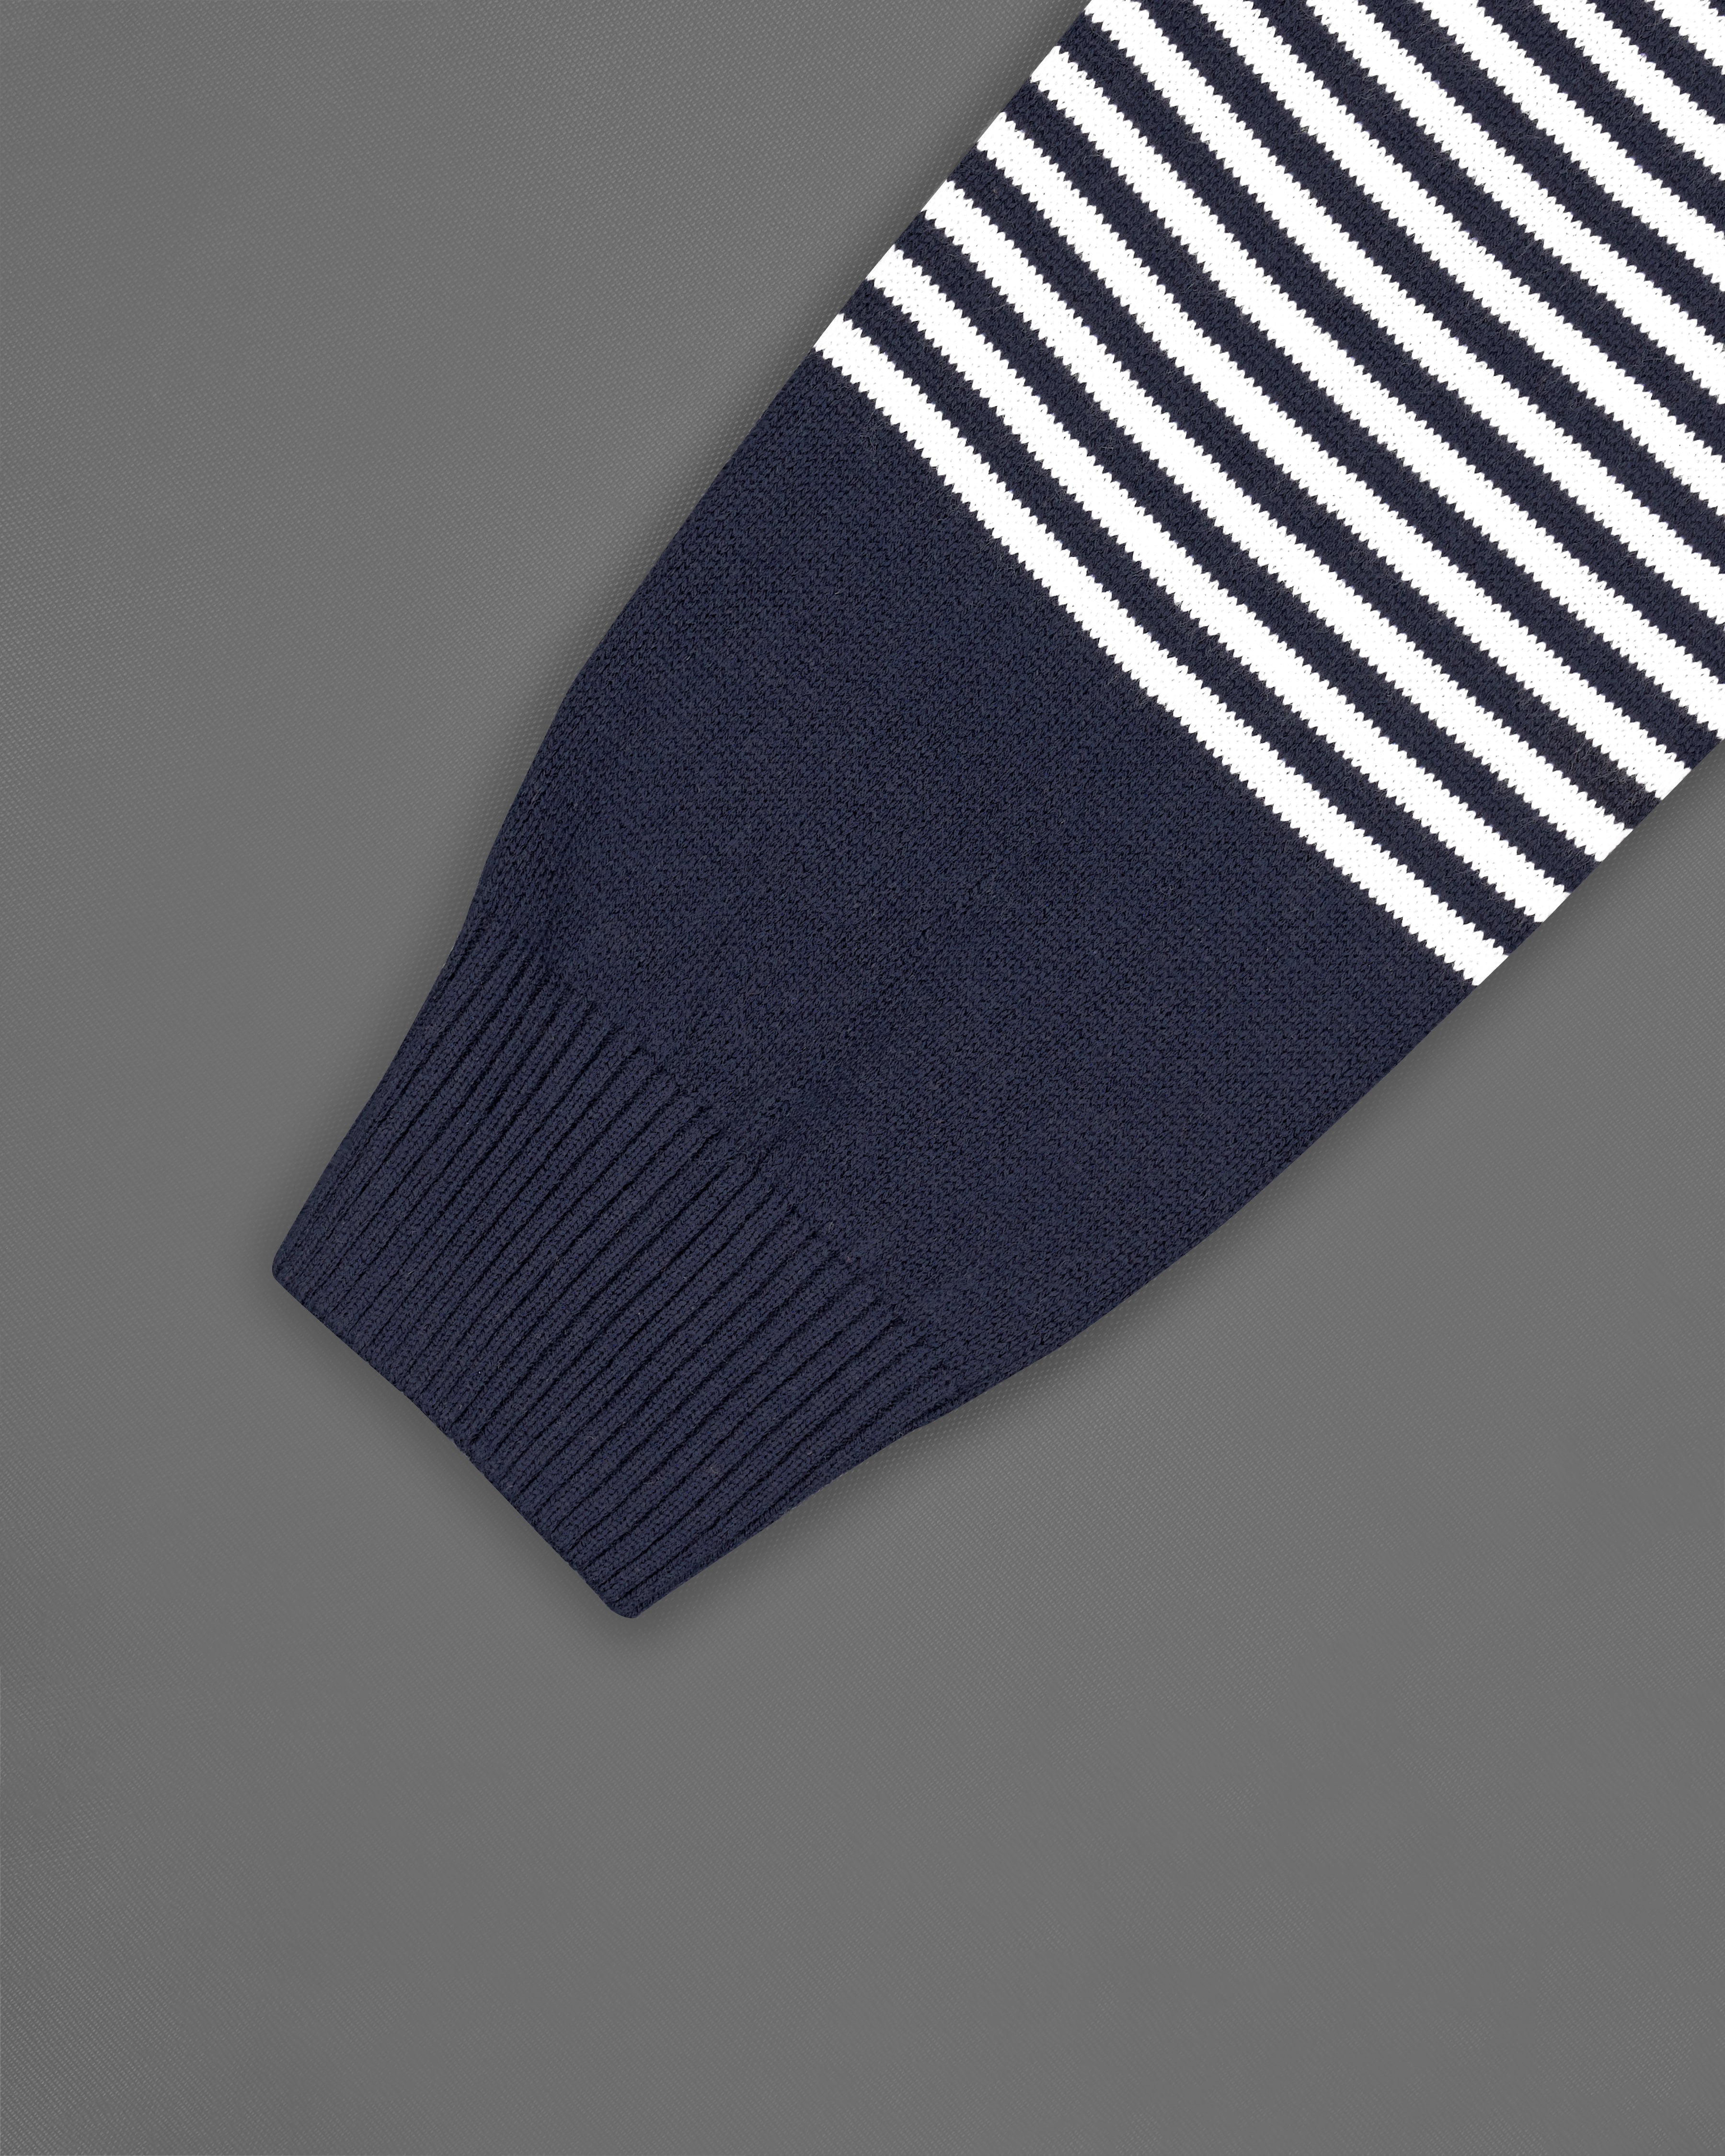 Ebony Navy Blue with Carmine Red and White Striped Premium Interlock Cotton Fabric Sweatshirt TS702-S, TS702-M, TS702-L, TS702-XL, TS702-XXL